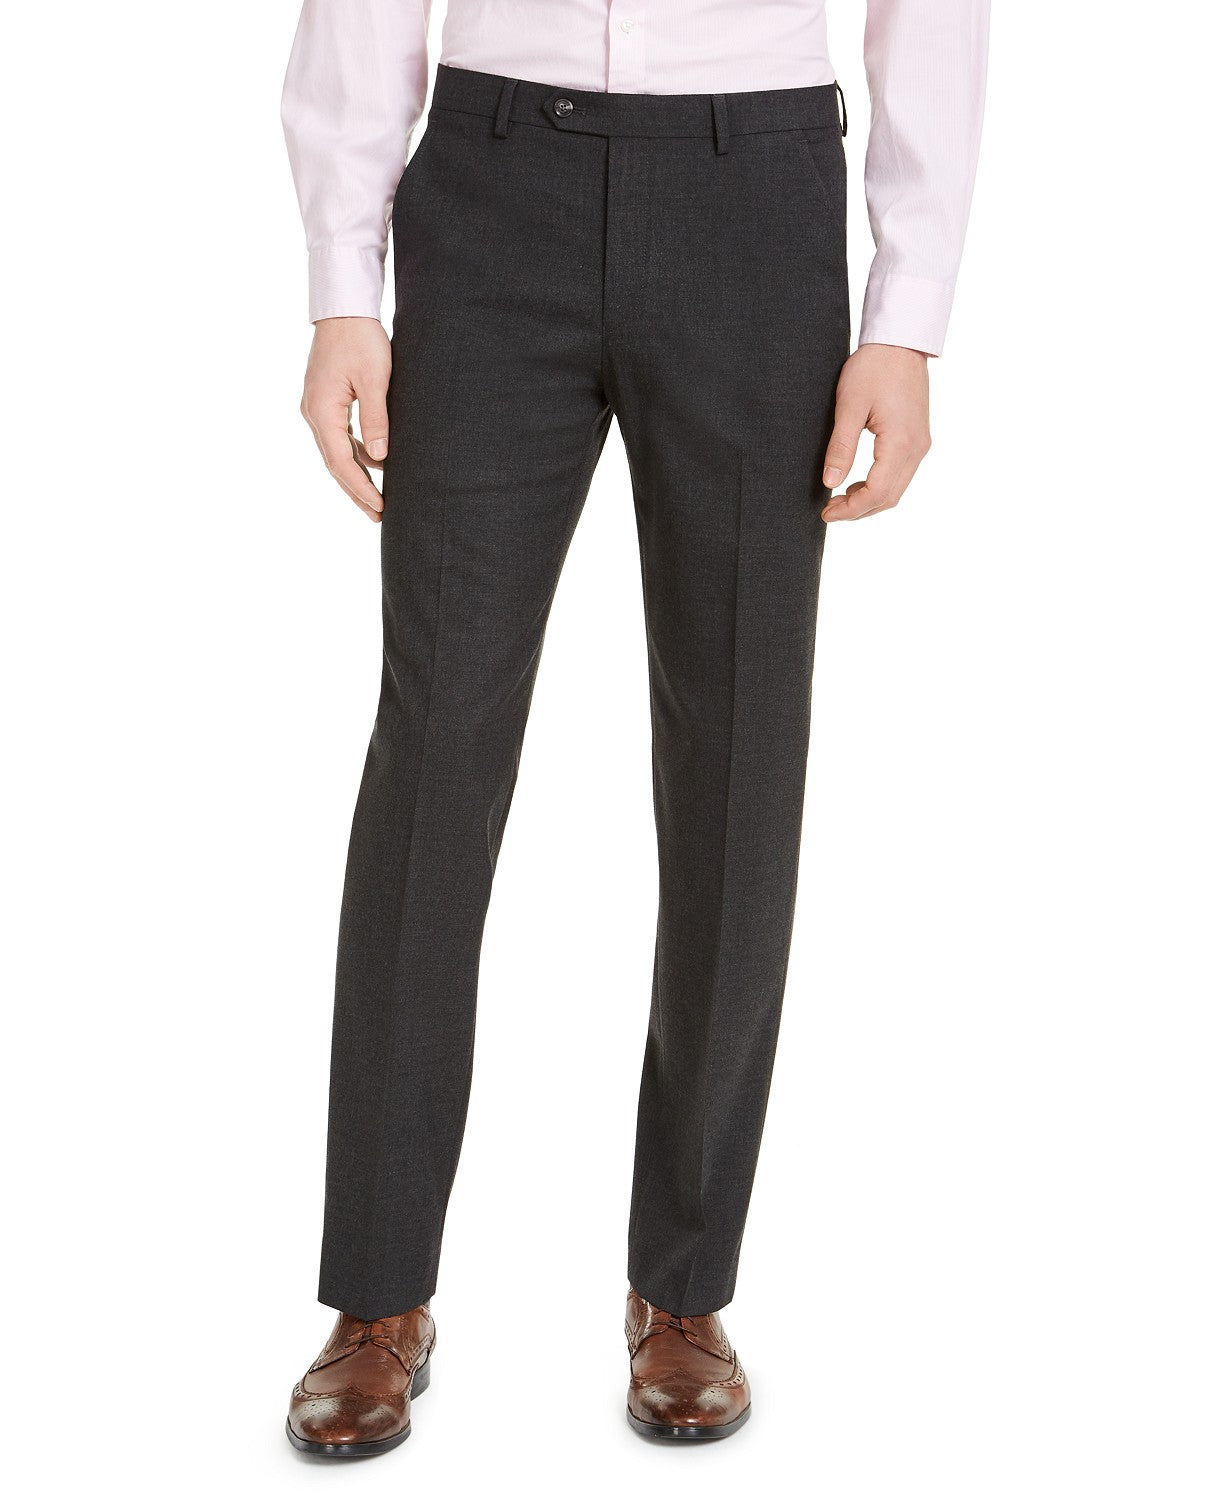 ALFANI Men's Suit Dress Pants 33 x 30 Slim-Fit Black & White Pattern –  Bristol Apparel Co